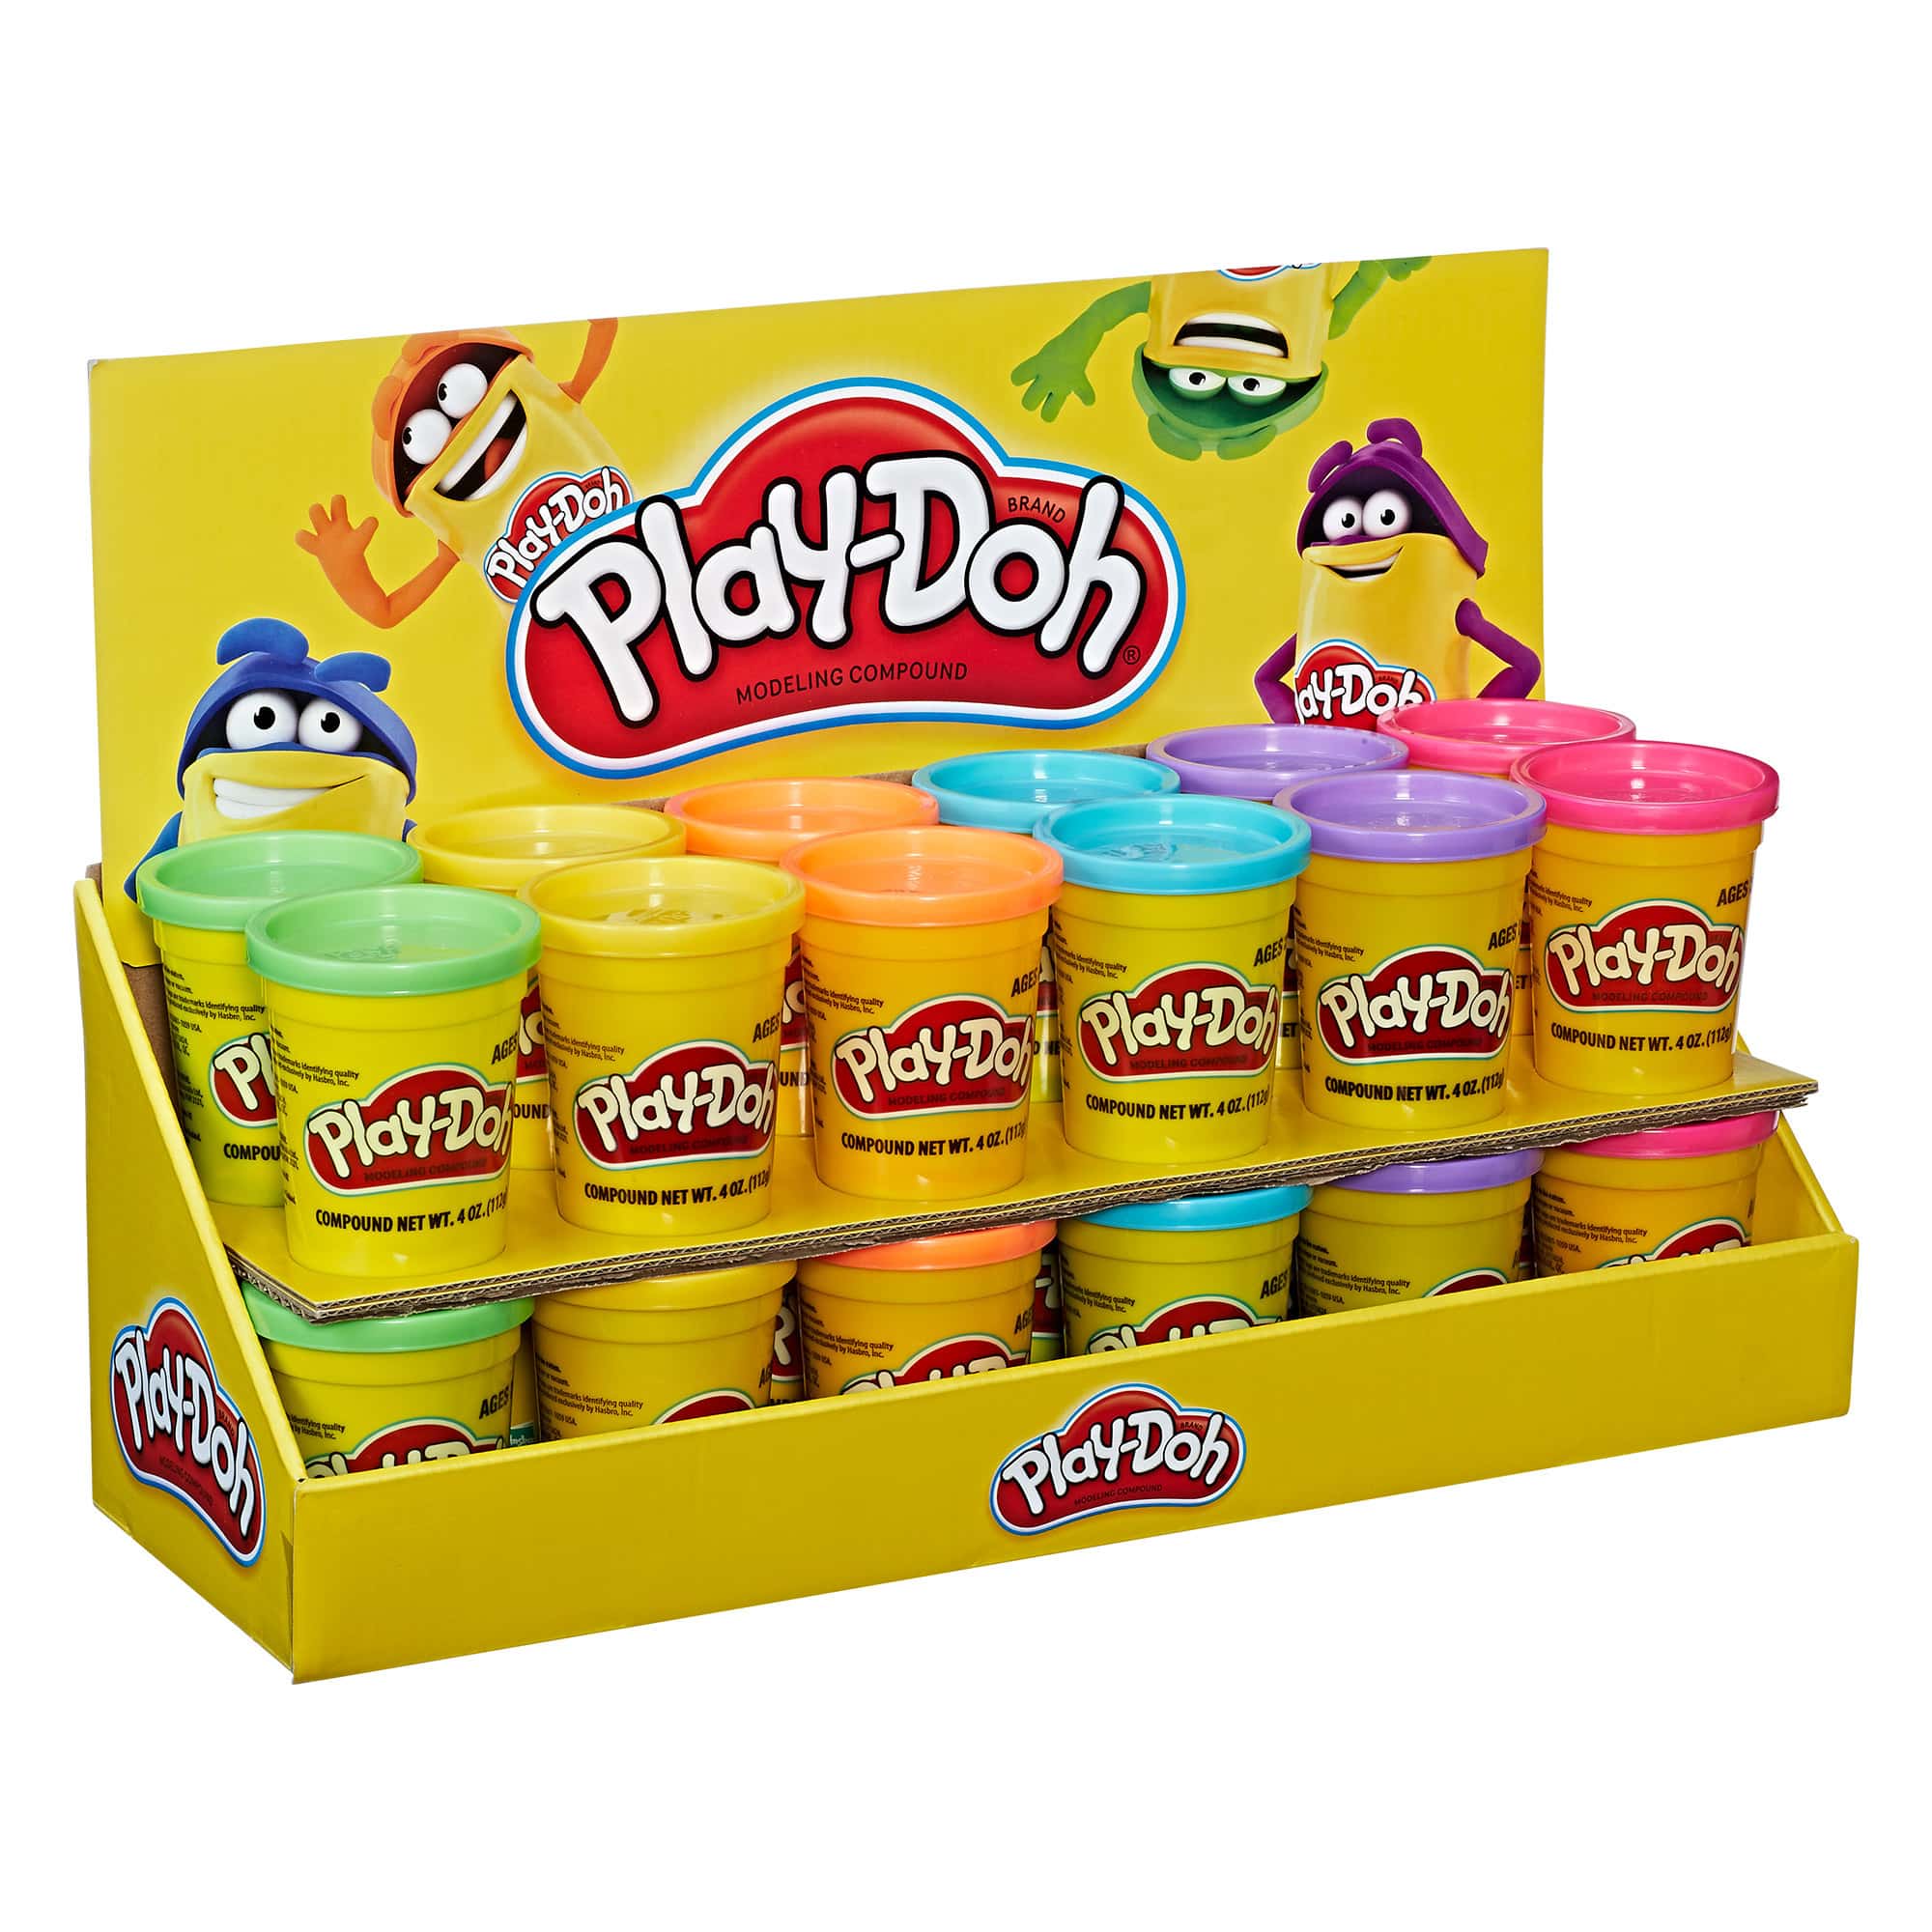 Play-Doh - Single Tub Pack